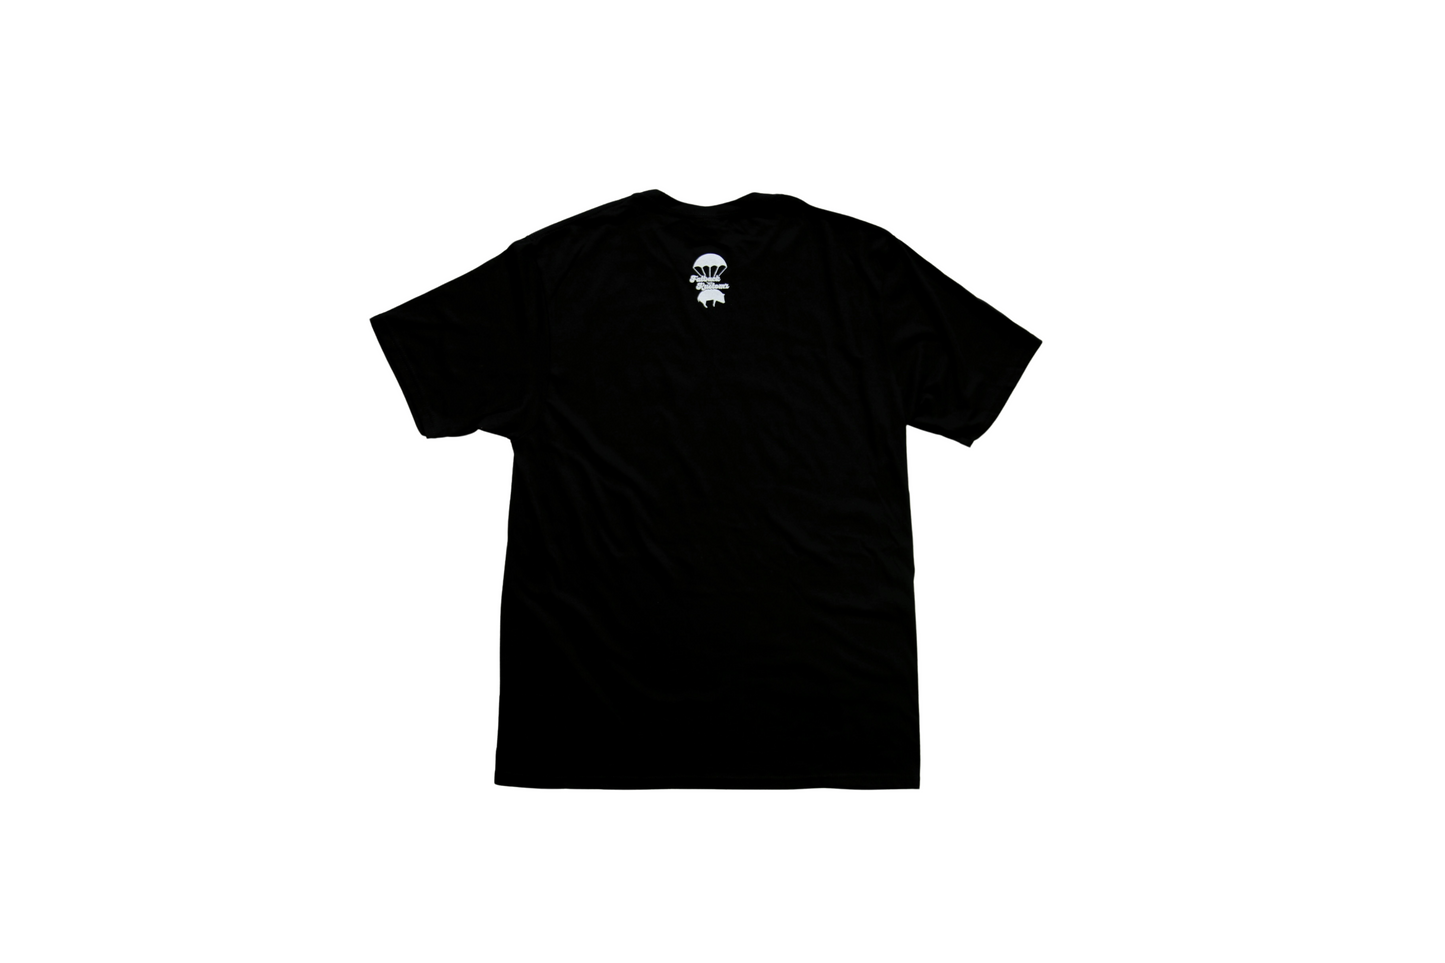 Fatback Customz T-shirt - Black